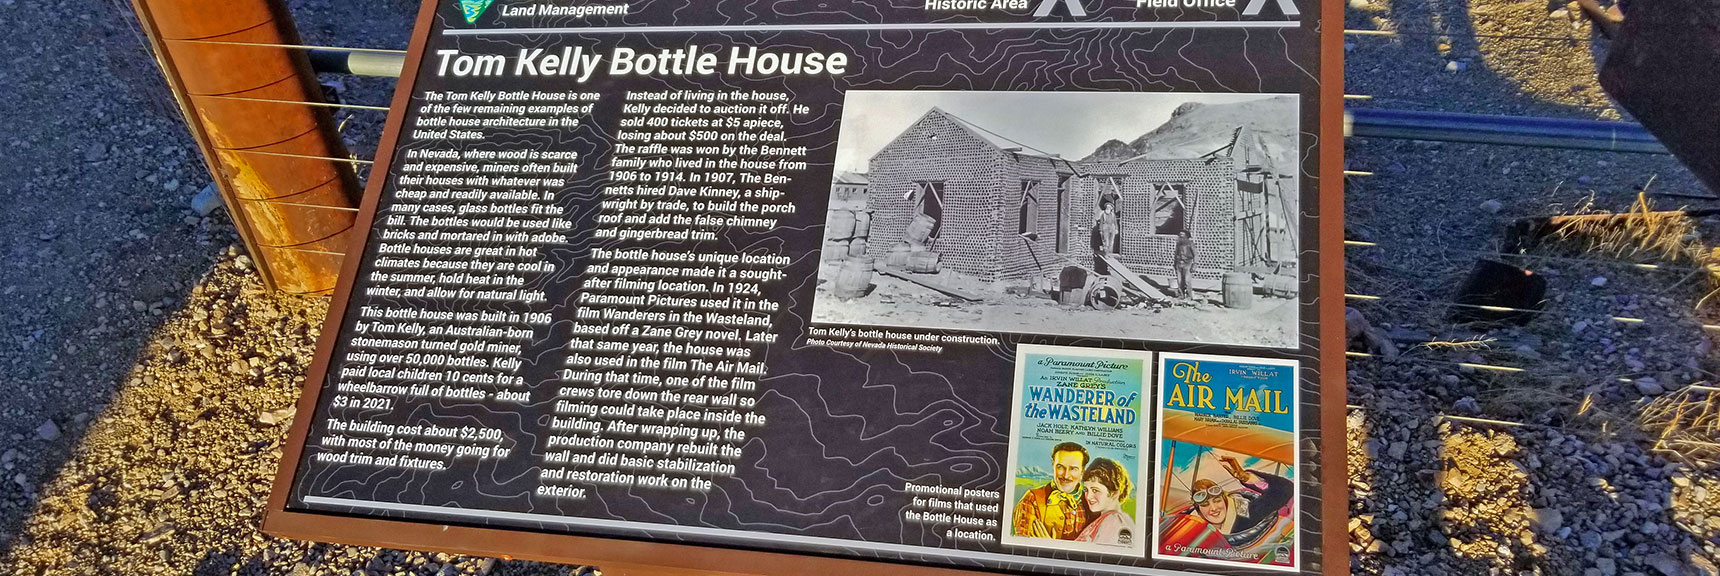 Tom Kelly Bottle House Interpretive Sign | Rhyolite Ghost Town | Death Valley Area, Nevada